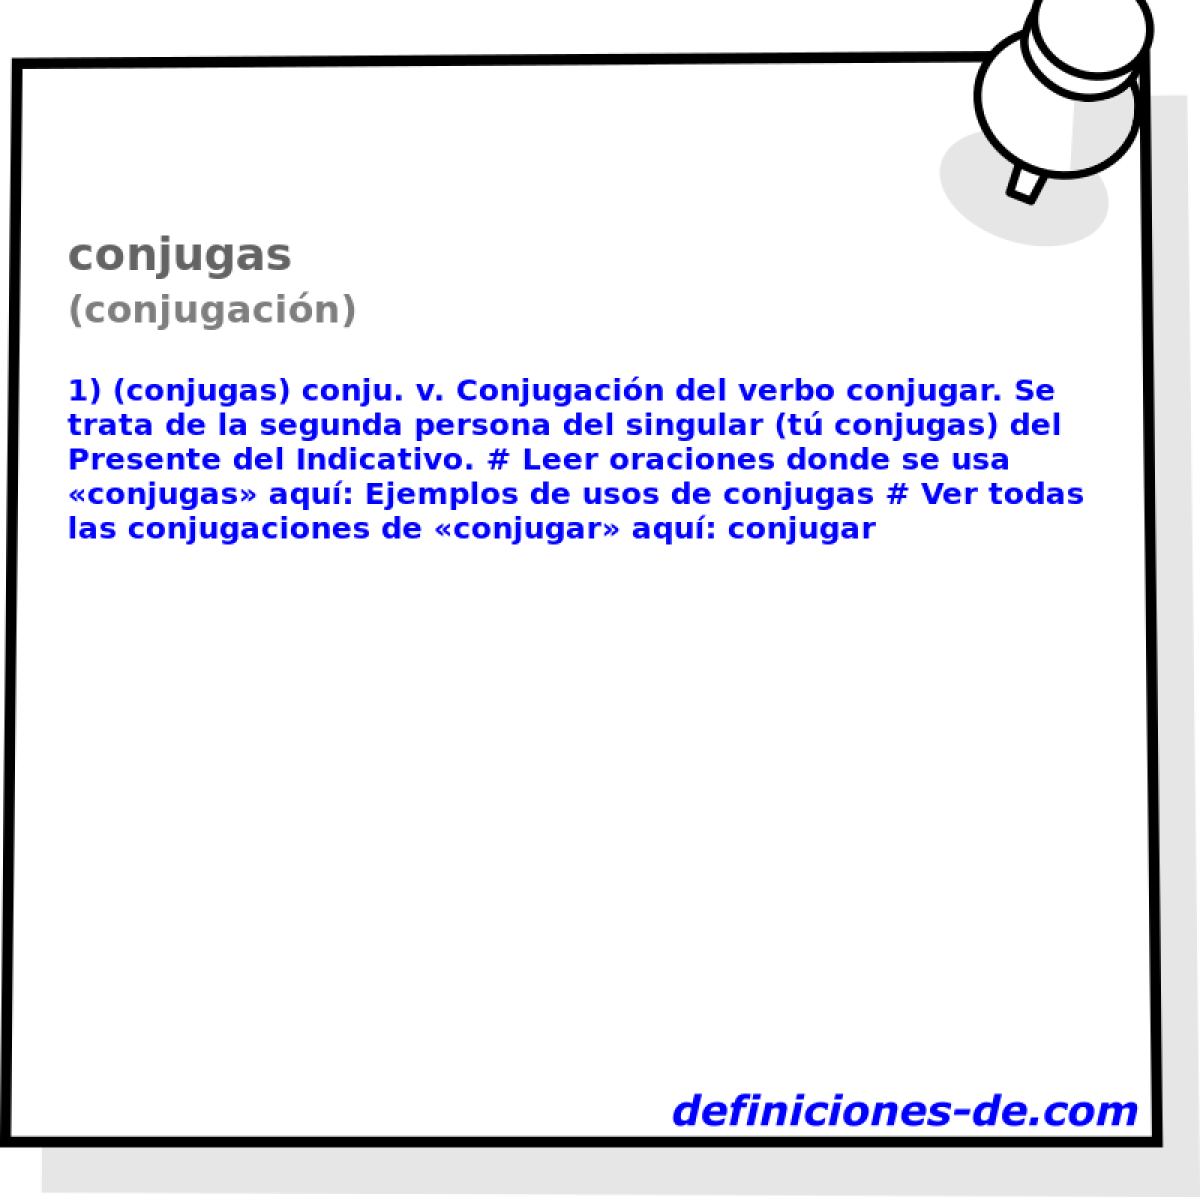 conjugas (conjugacin)